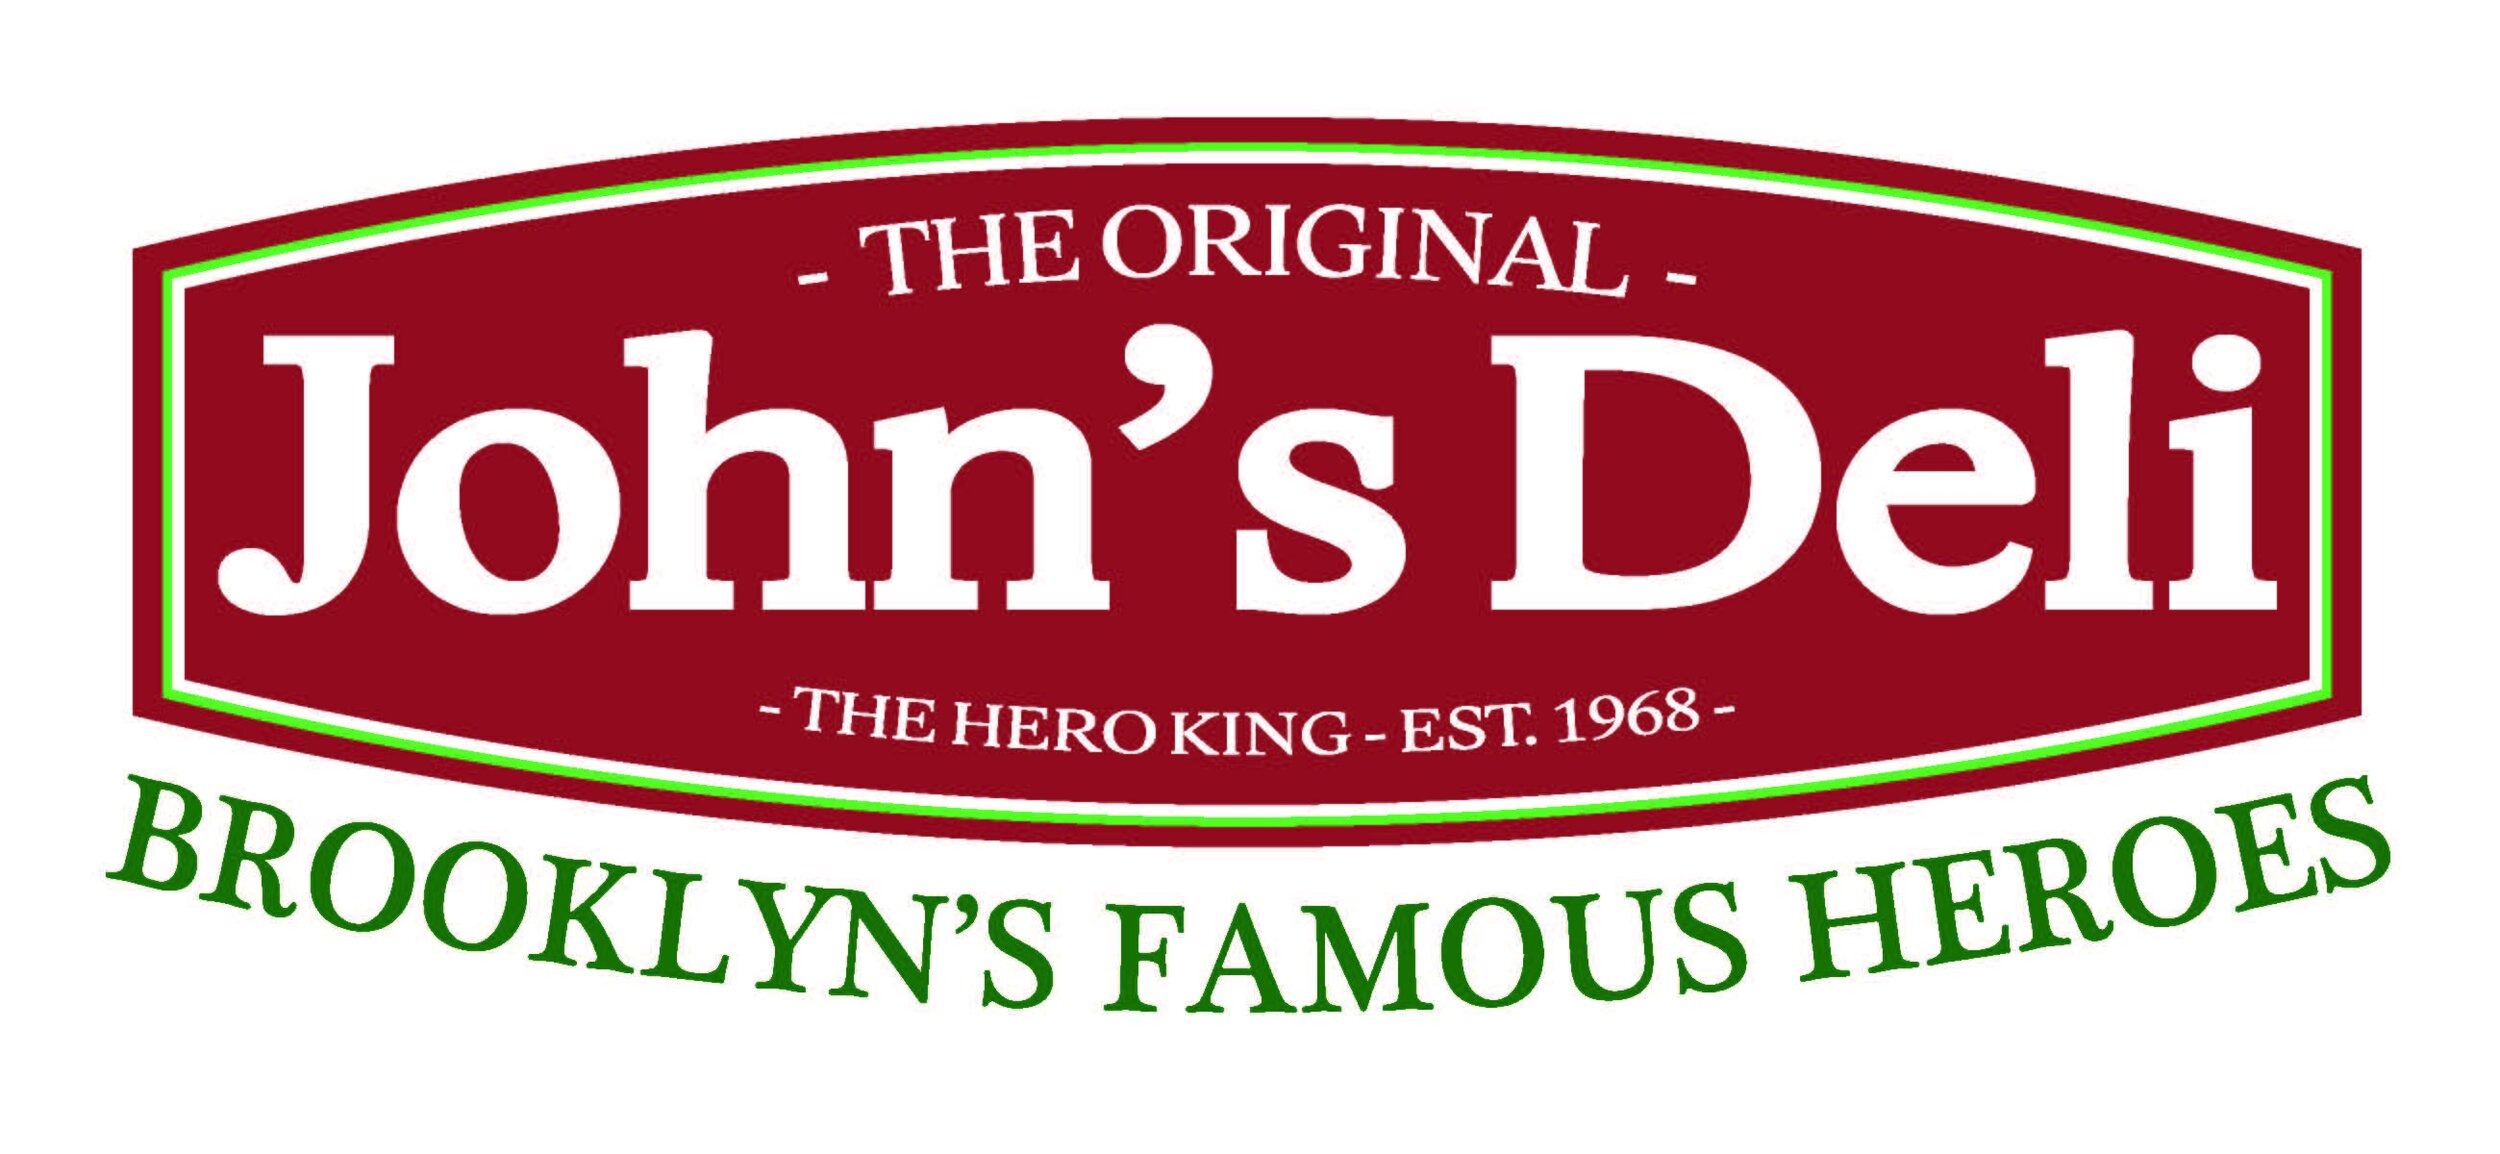 Johns Deli - Logo.jpg